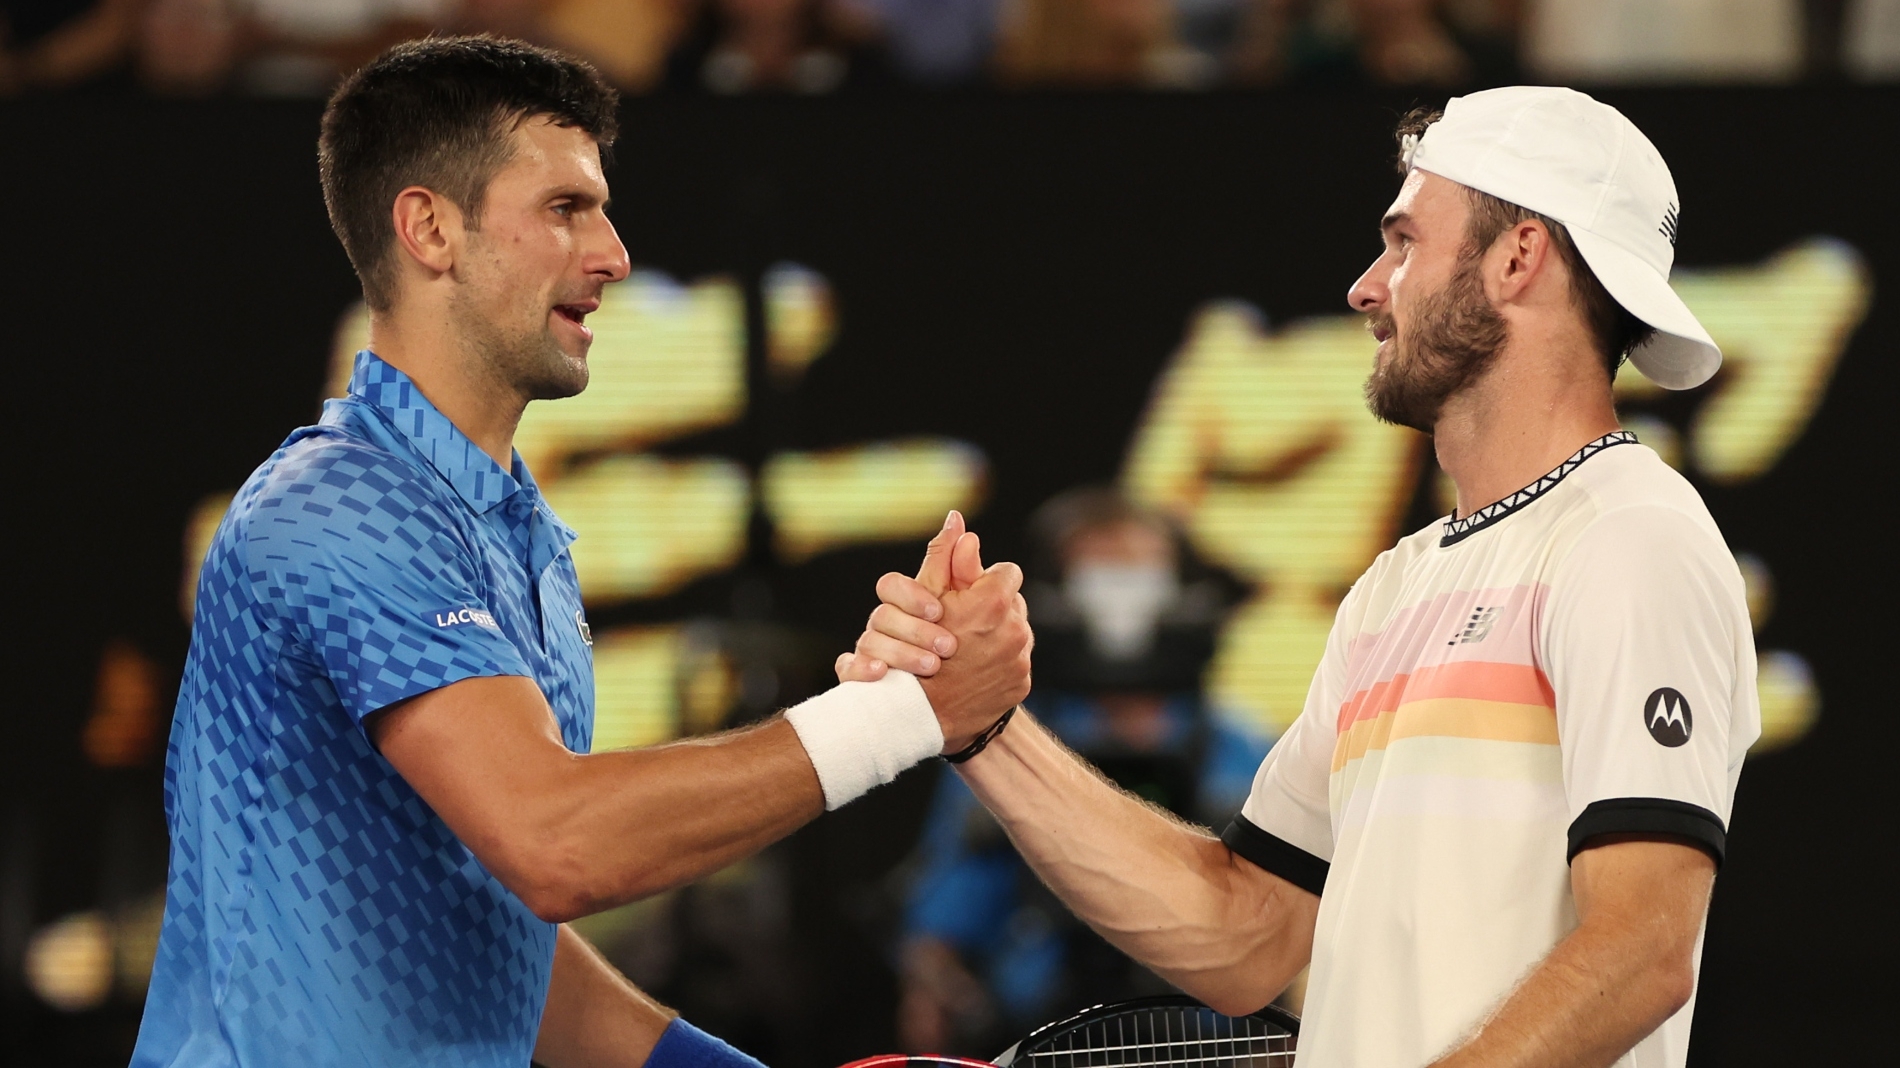 Djokovic ends Pauls Australian Open dream run in the semifinals - Stream the Video